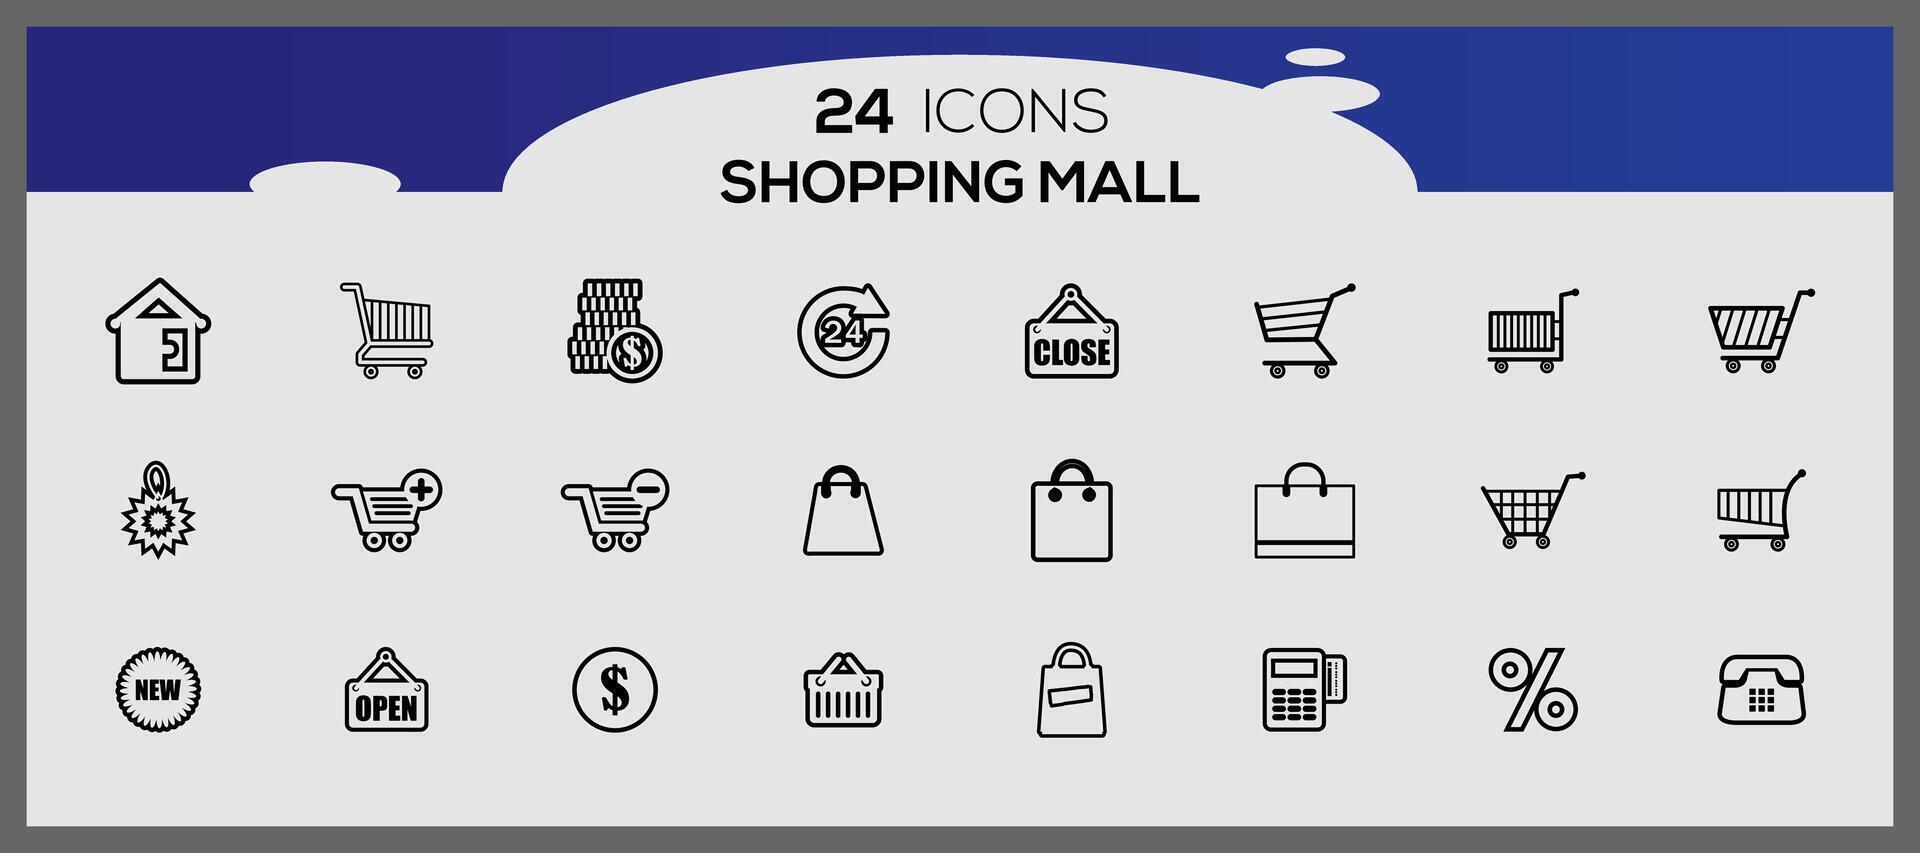 Supermarkt minimal Symbole Satz. E-Comerce Symbol Sammlung. Einkaufen Symbole. vektor